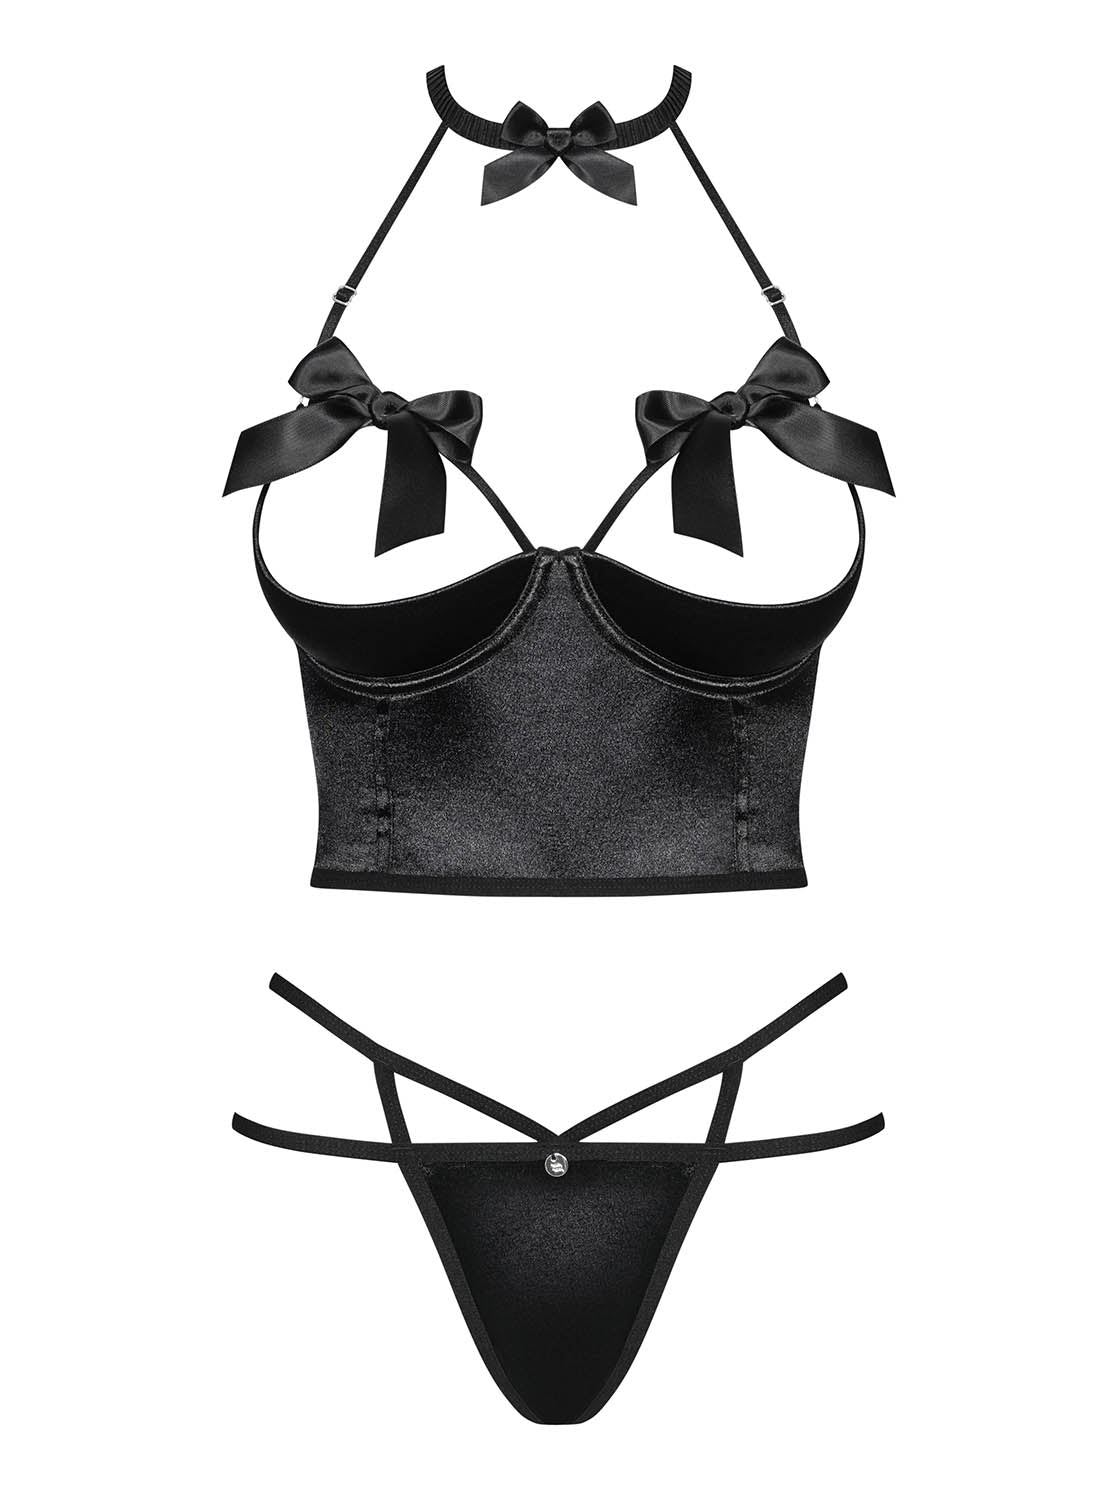 Delishya a striking black lingerie set made of shiny satin material and elastic straps